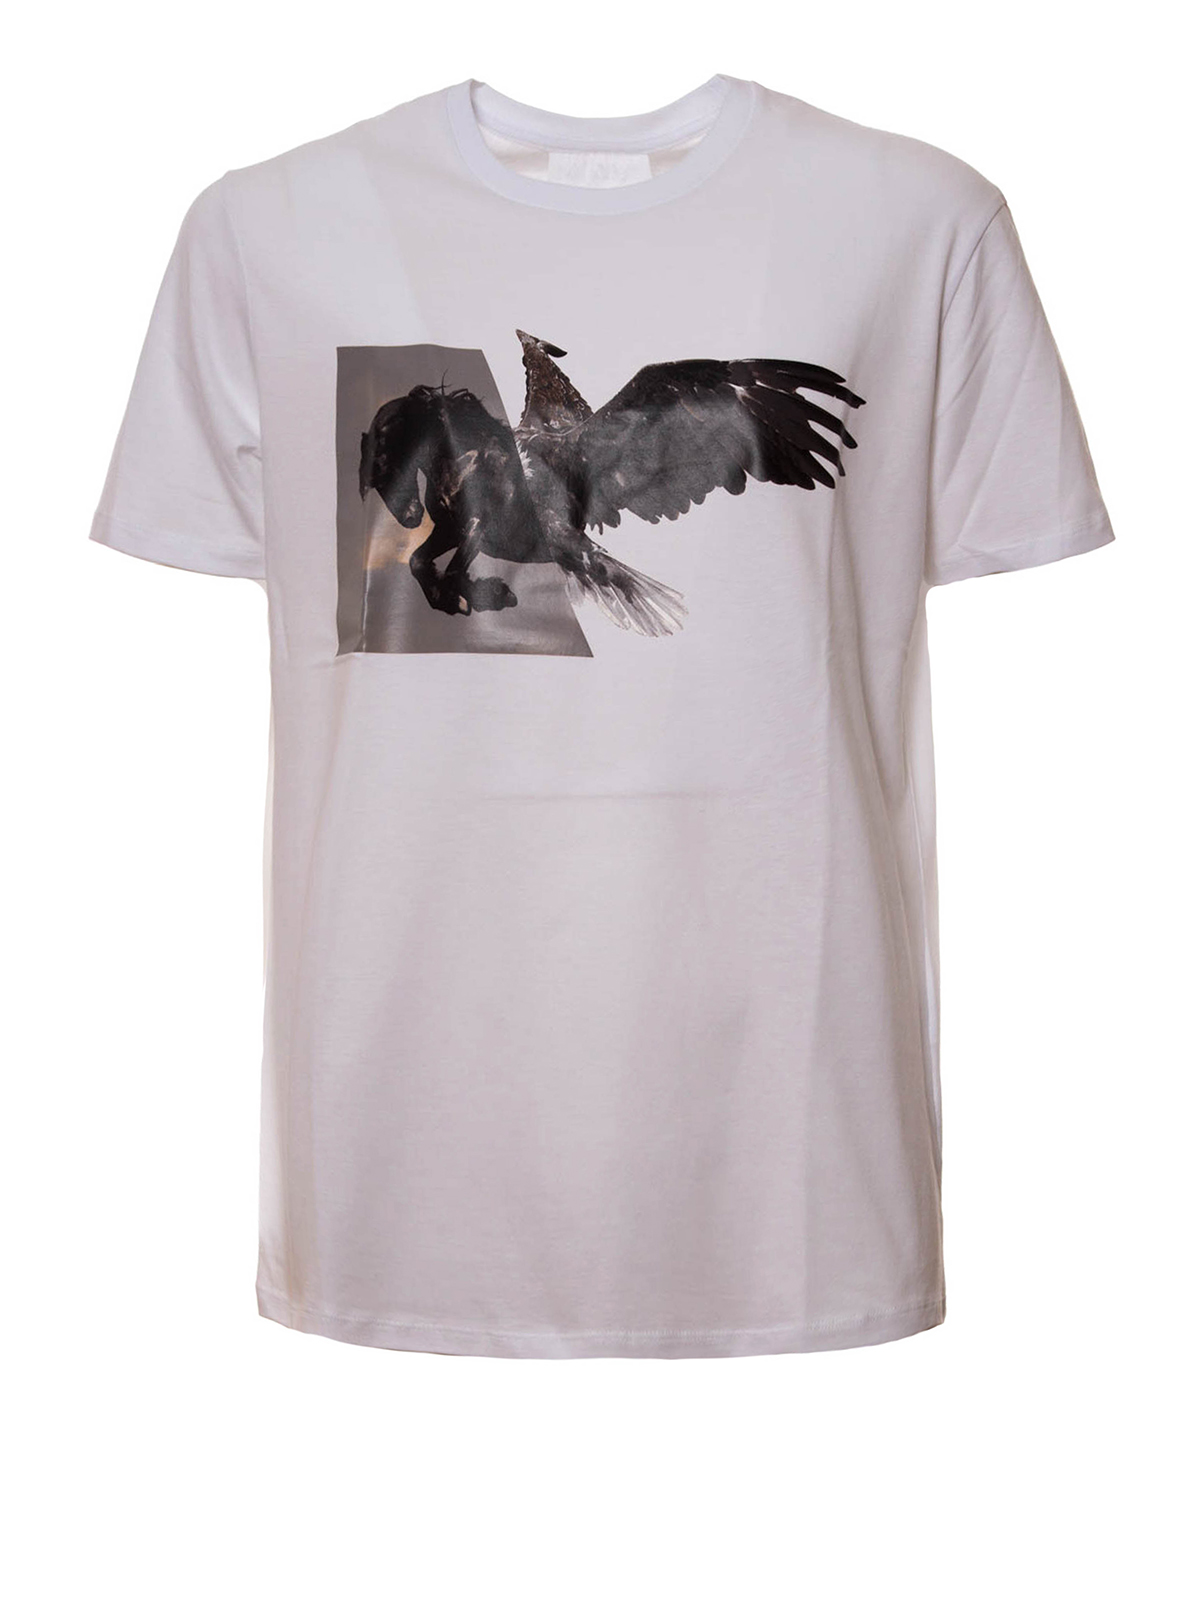 Kamp Normalisering Penneven T-shirts Neil Barrett - Horse Eagle print T-shirt - BJT171IB545S03